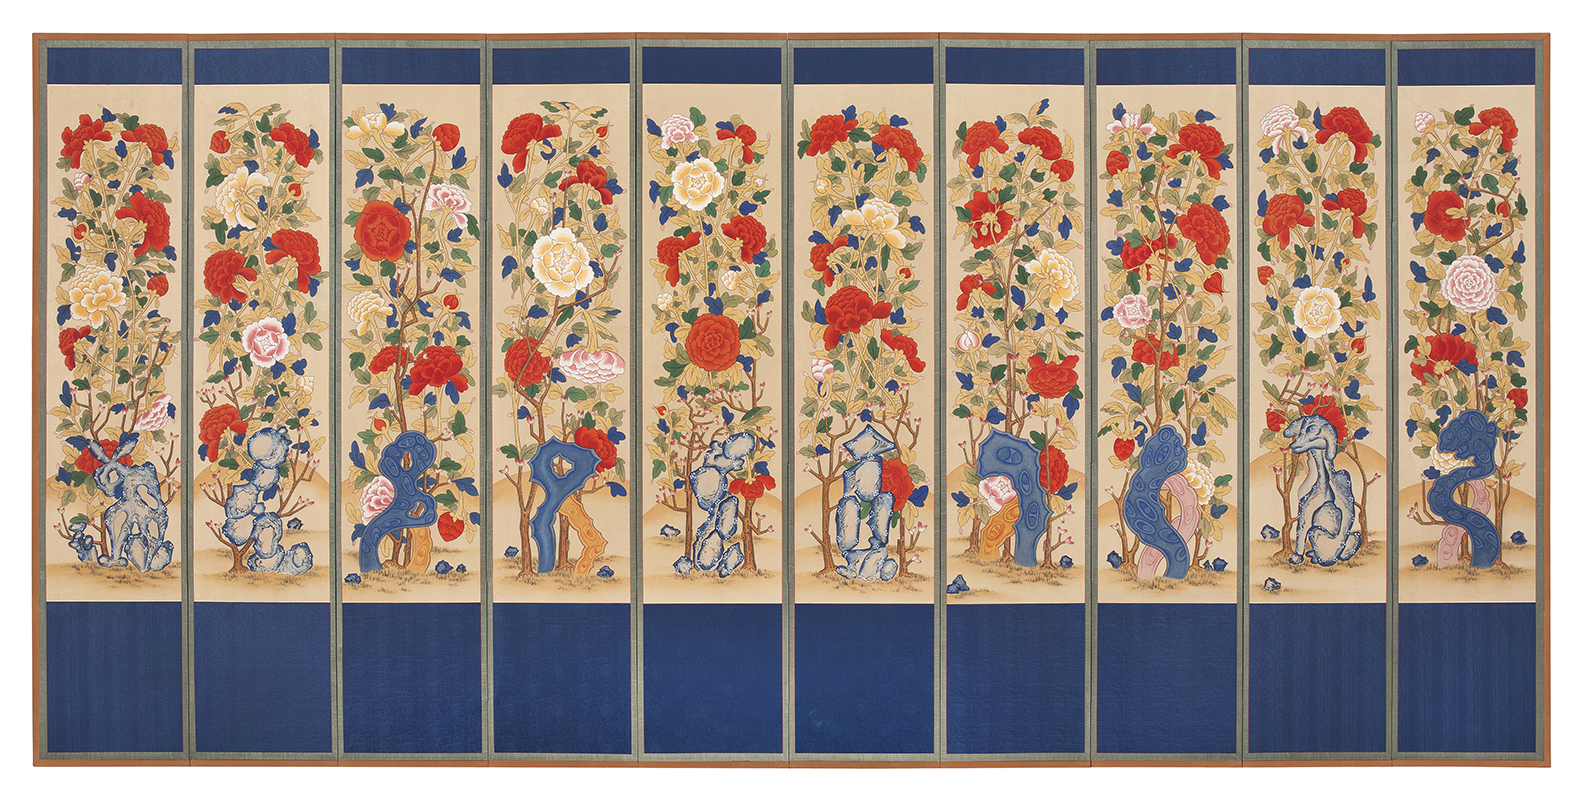 Peonies(Morando), 2012, Color on Korean paper, (39.5 x 145 cm) x 10panels